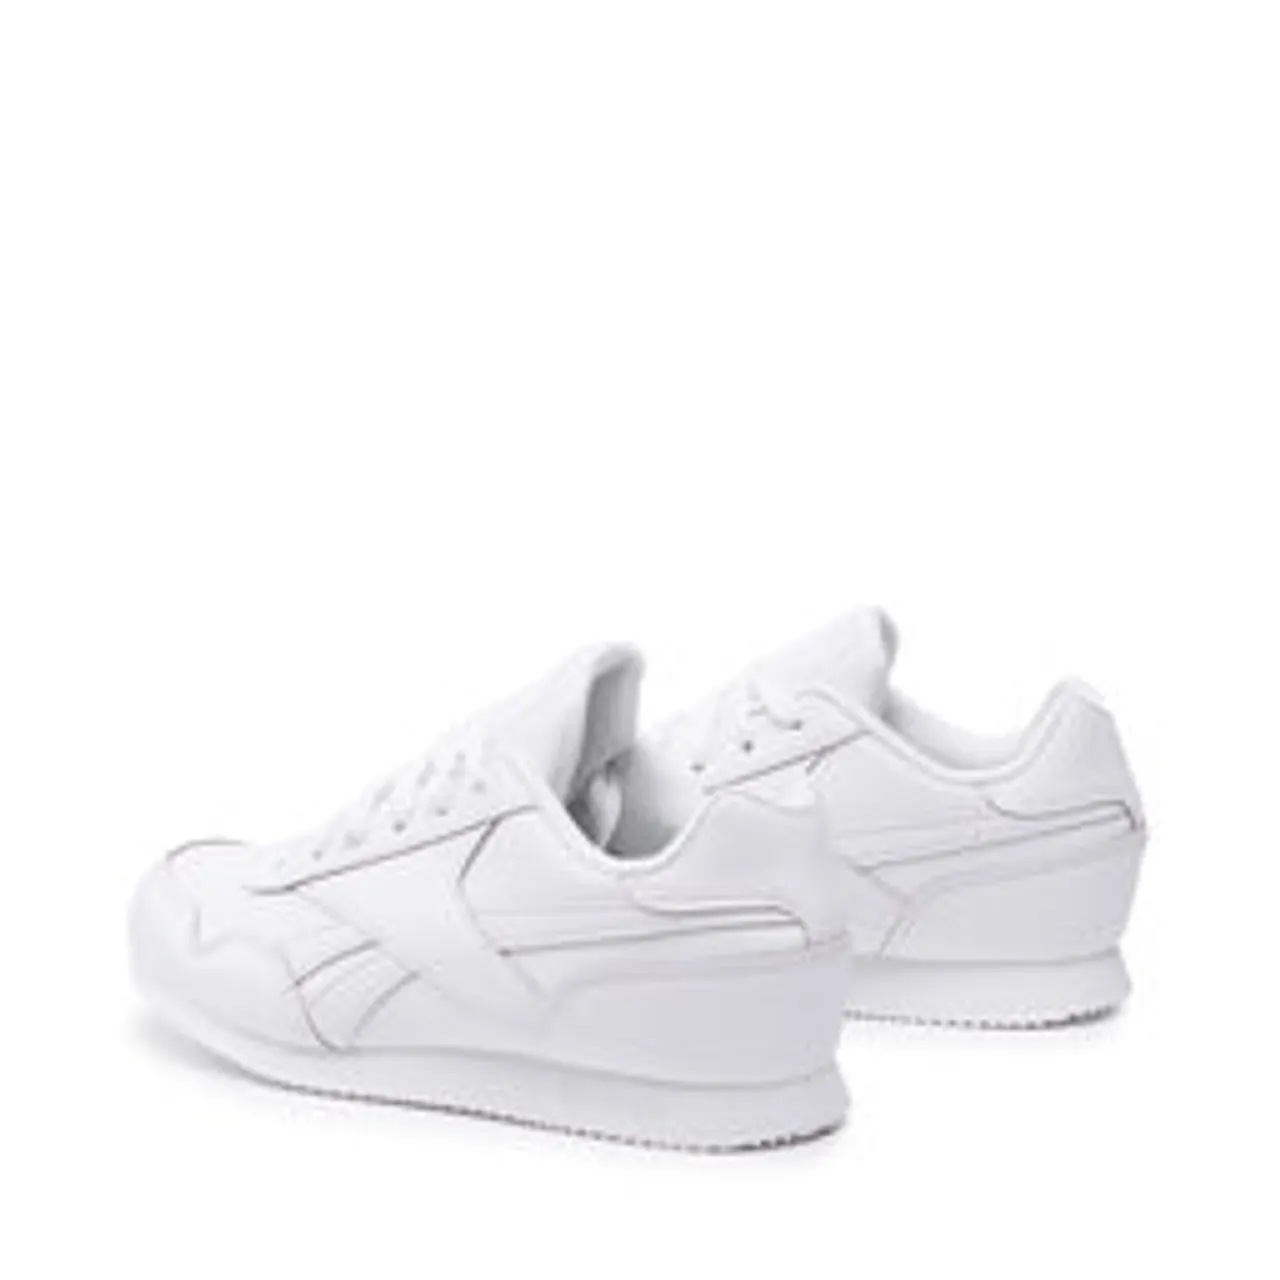 Schuhe Reebok Royal Cljog 3.0 FV1493 White/White/White